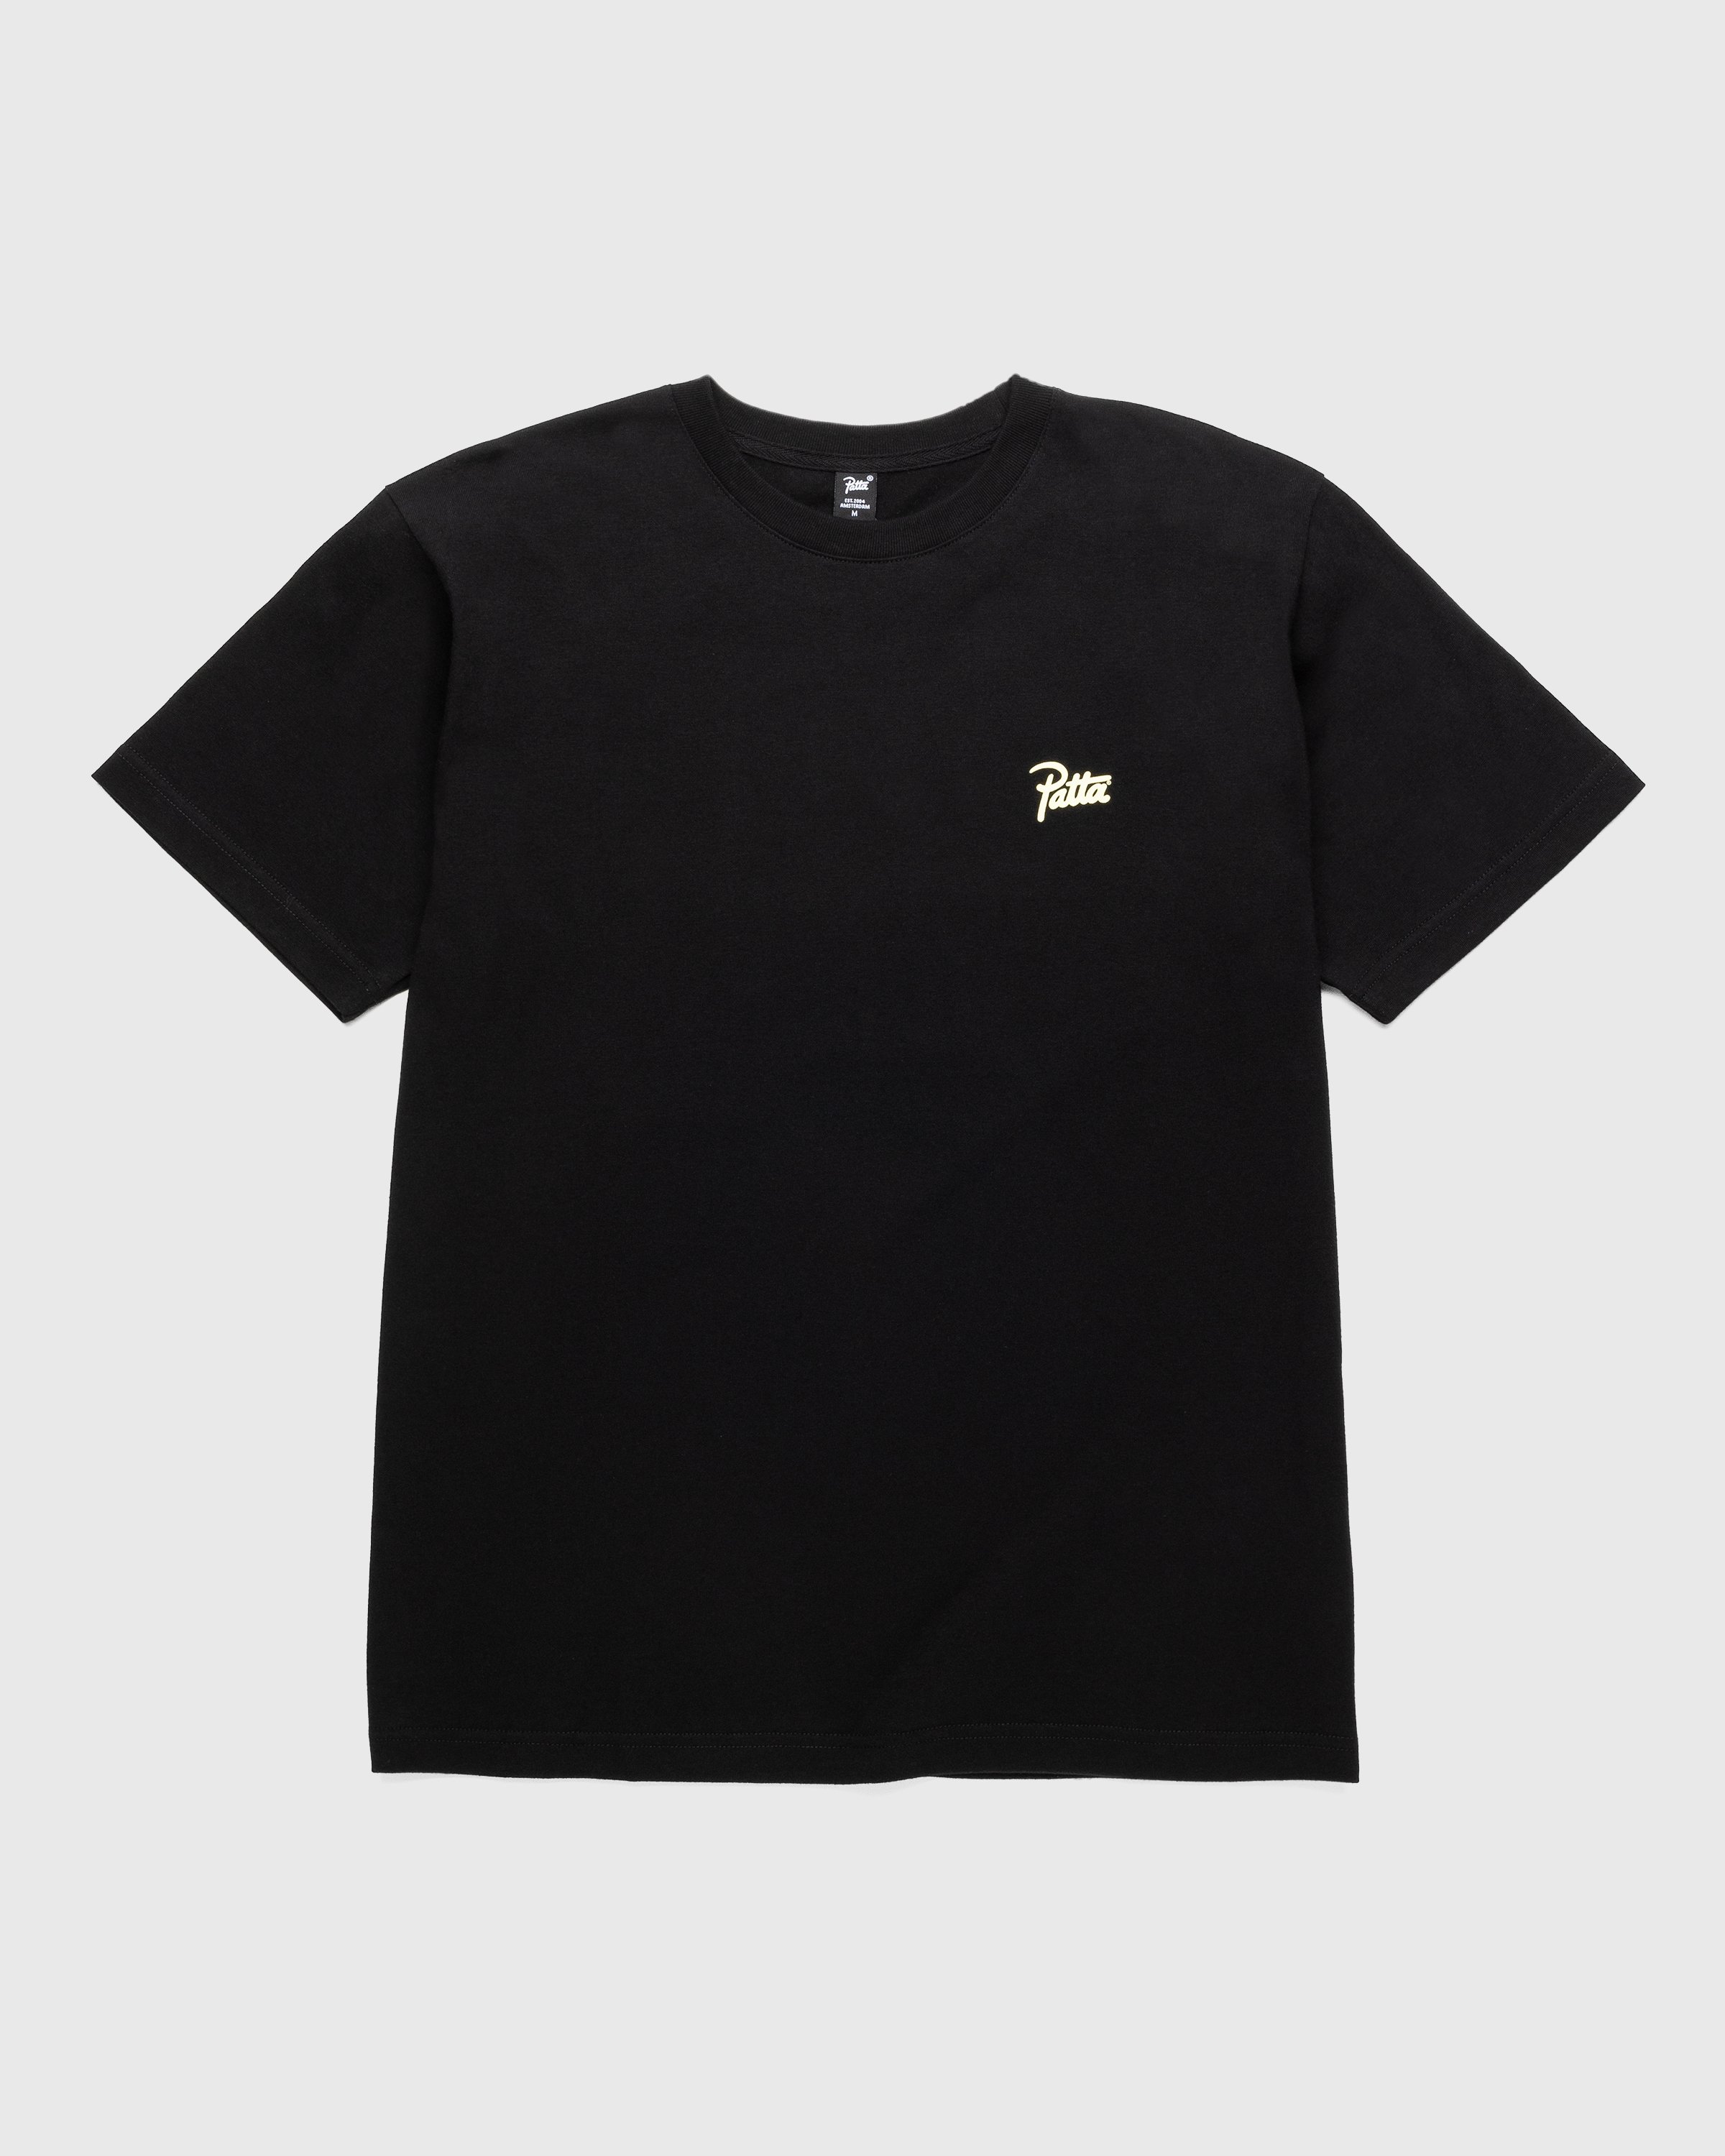 Patta - Freaky T-Shirt Black - Clothing - Black - Image 2